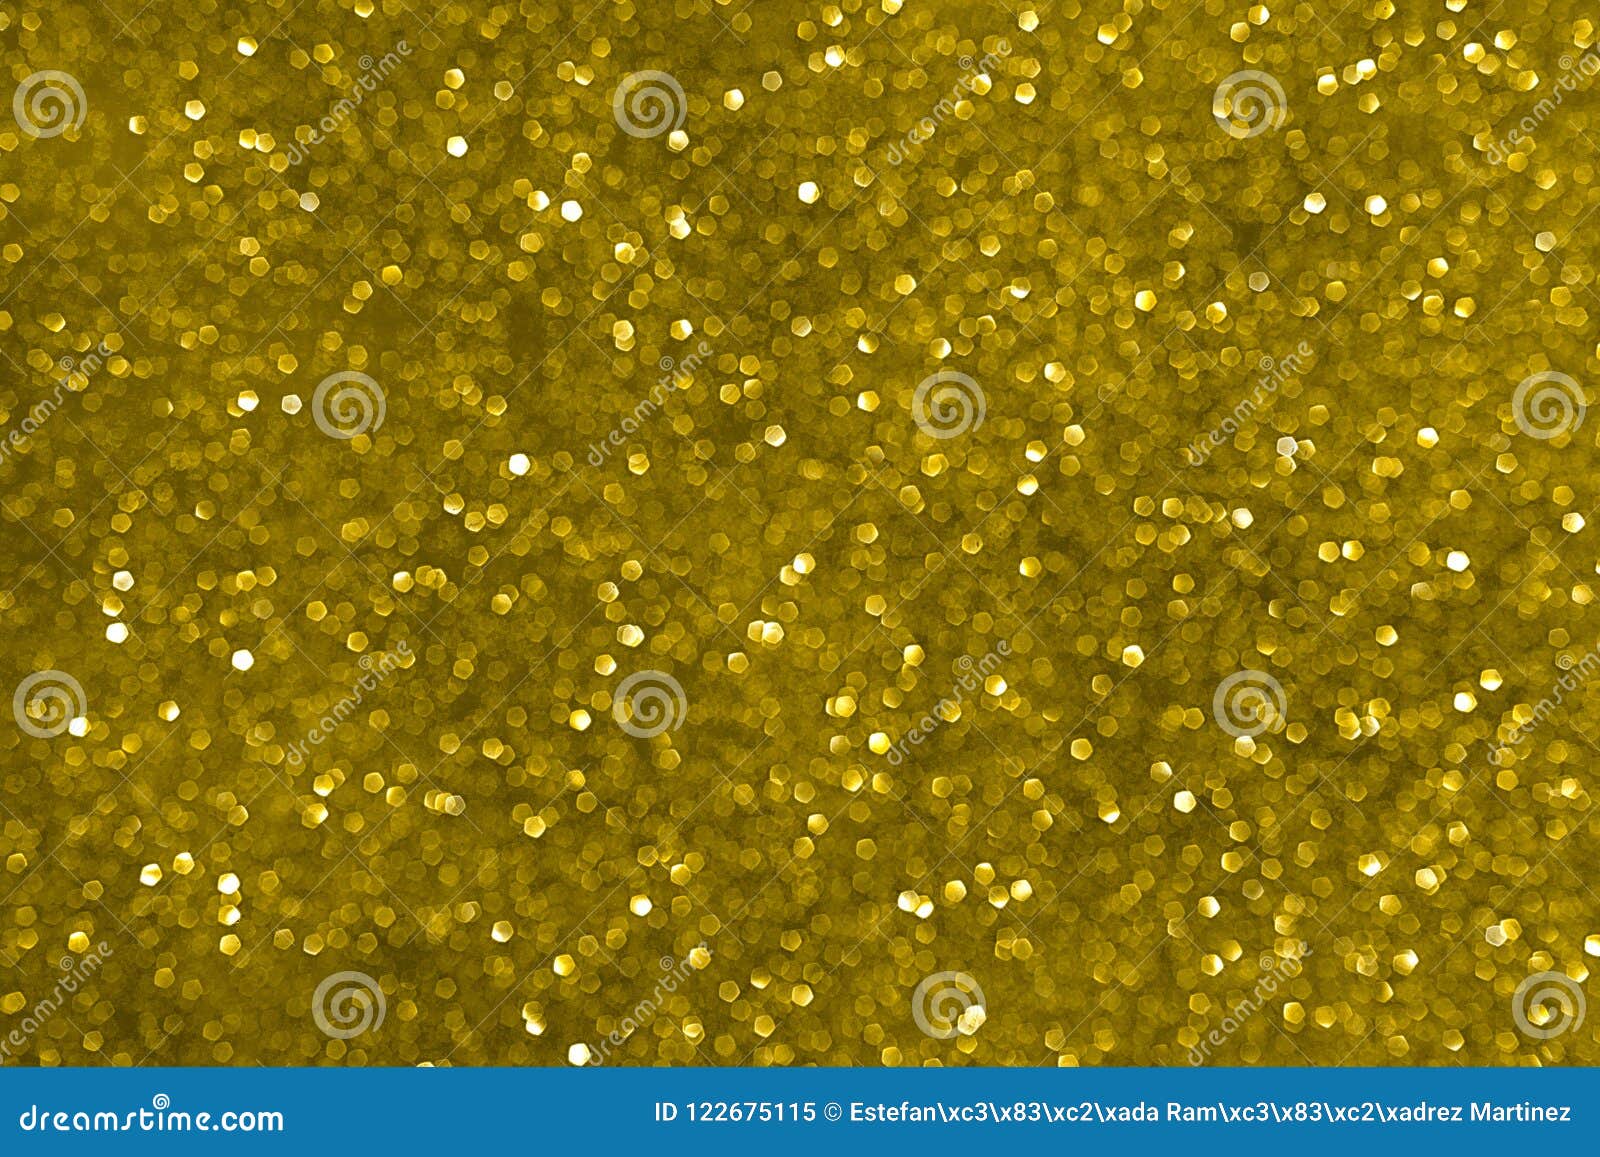 sparkly glitter, golden background bokeh effect